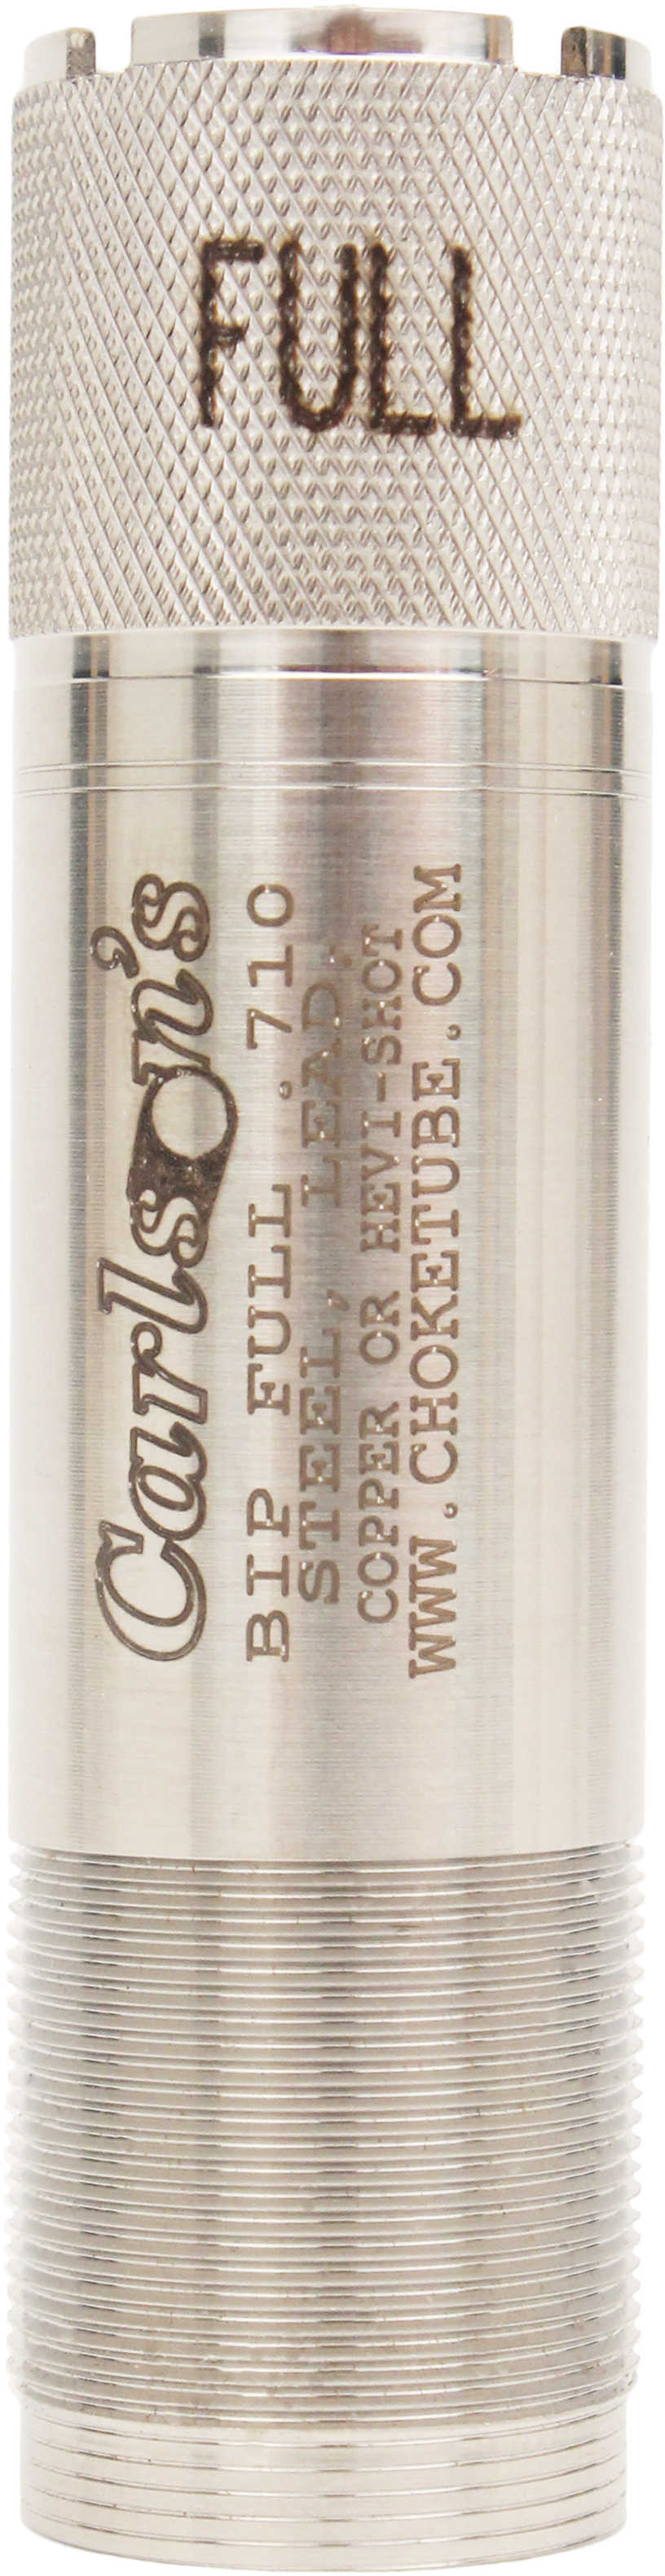 Carlsons Browning Inv+ Choke Tubes Sporting Clays, 12 Gauge, Full .710 18867